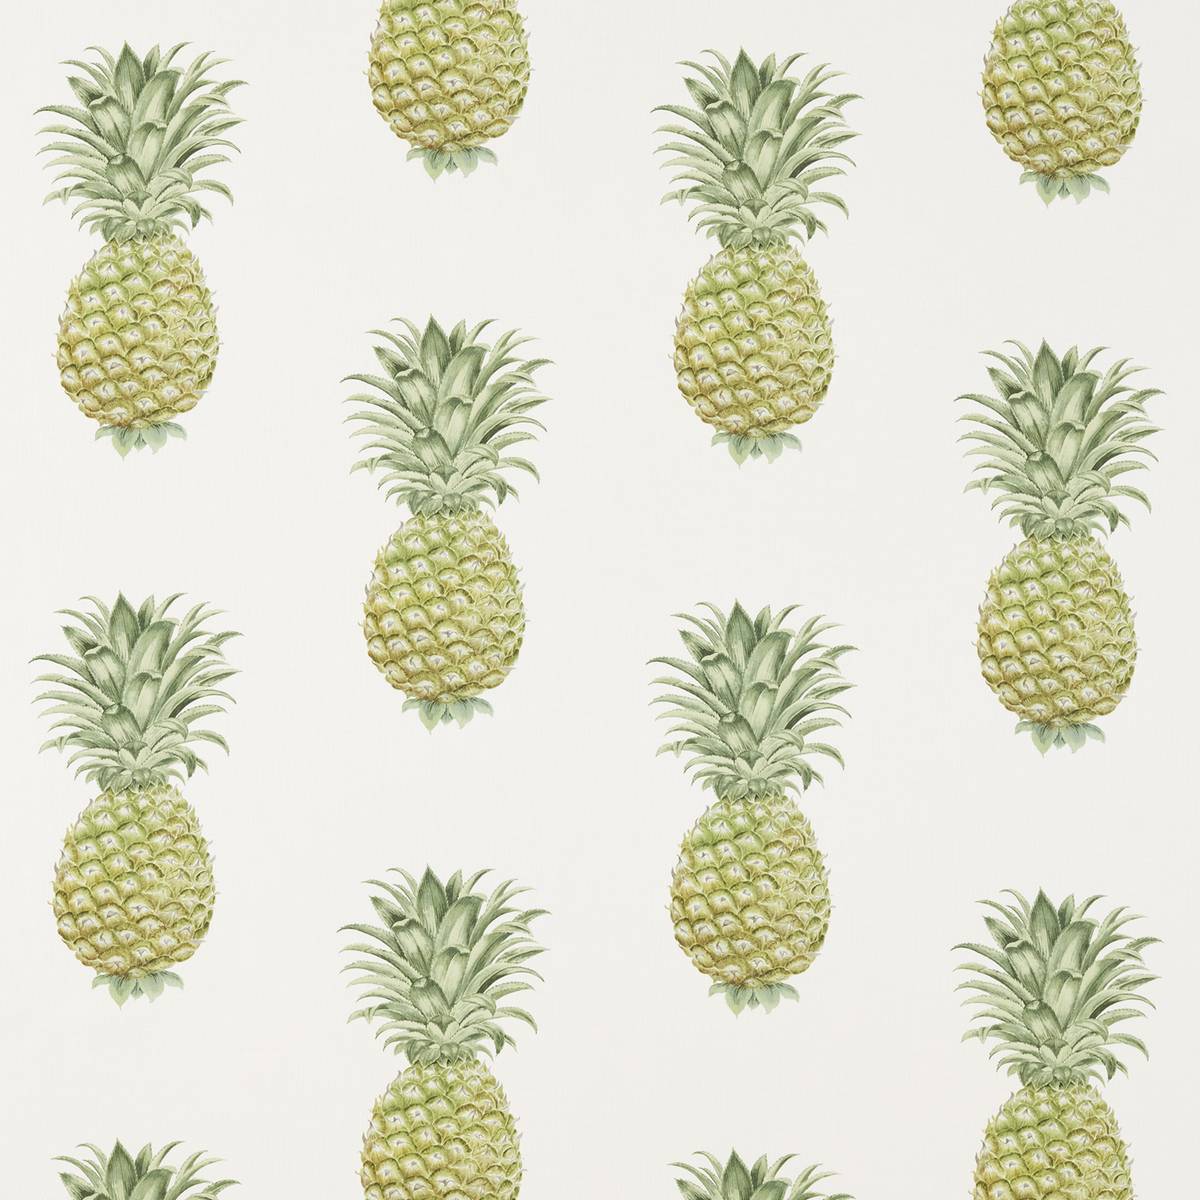 Pineapple Royale Garden Green Fabric by Sanderson